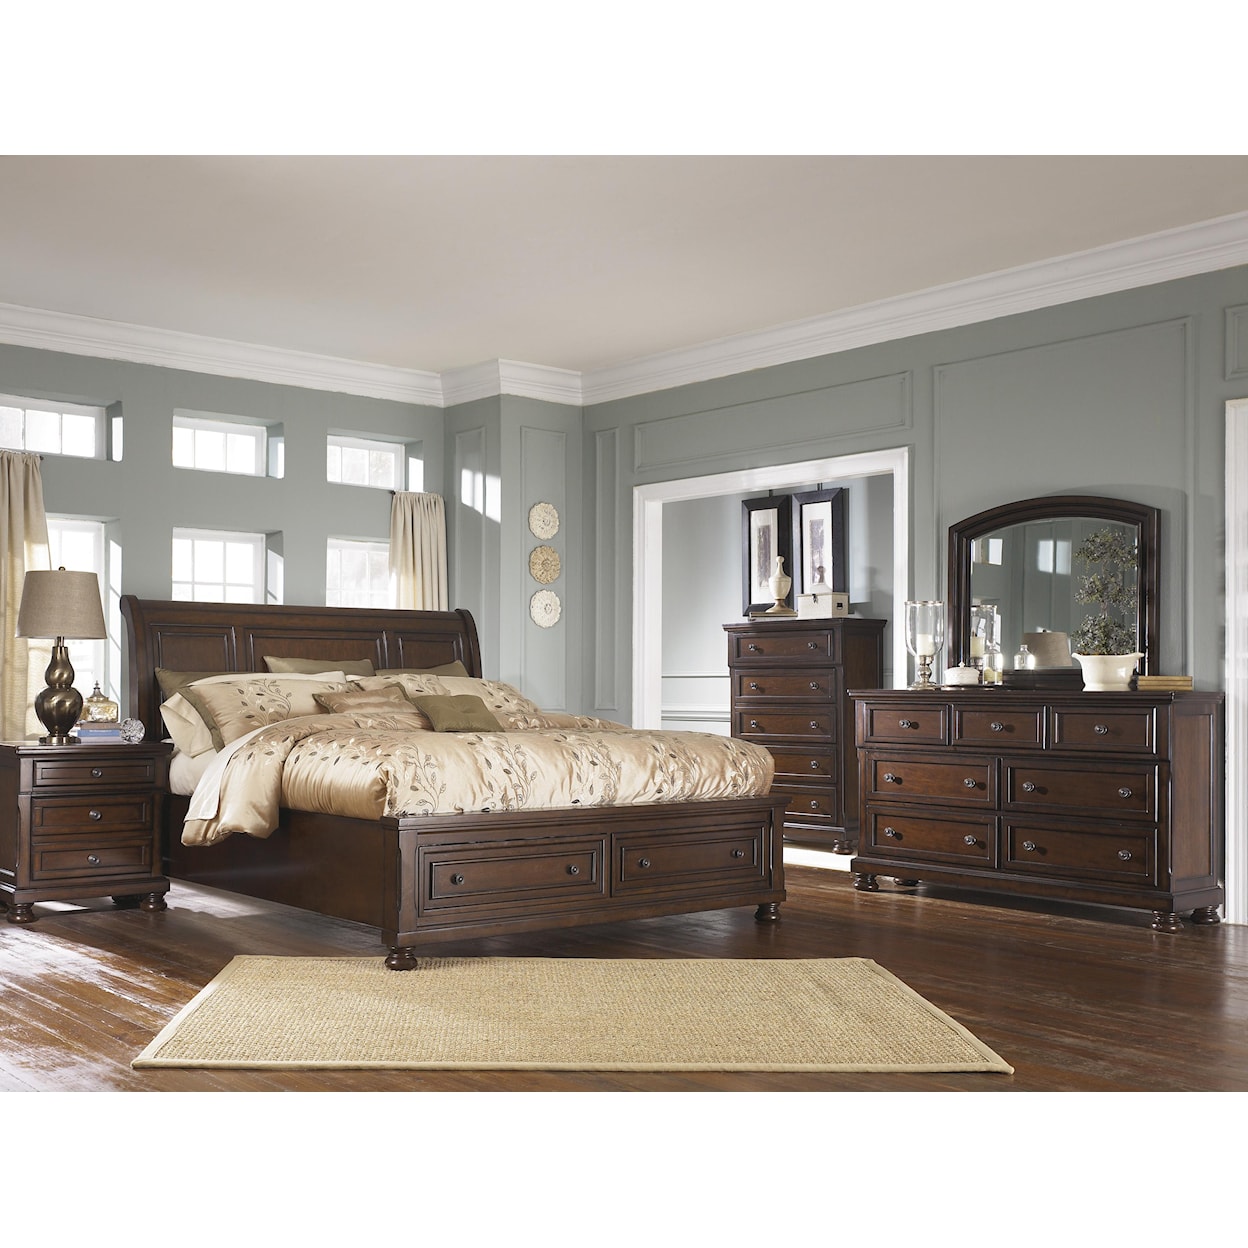 Ashley Furniture Porter California King Bedroom Group